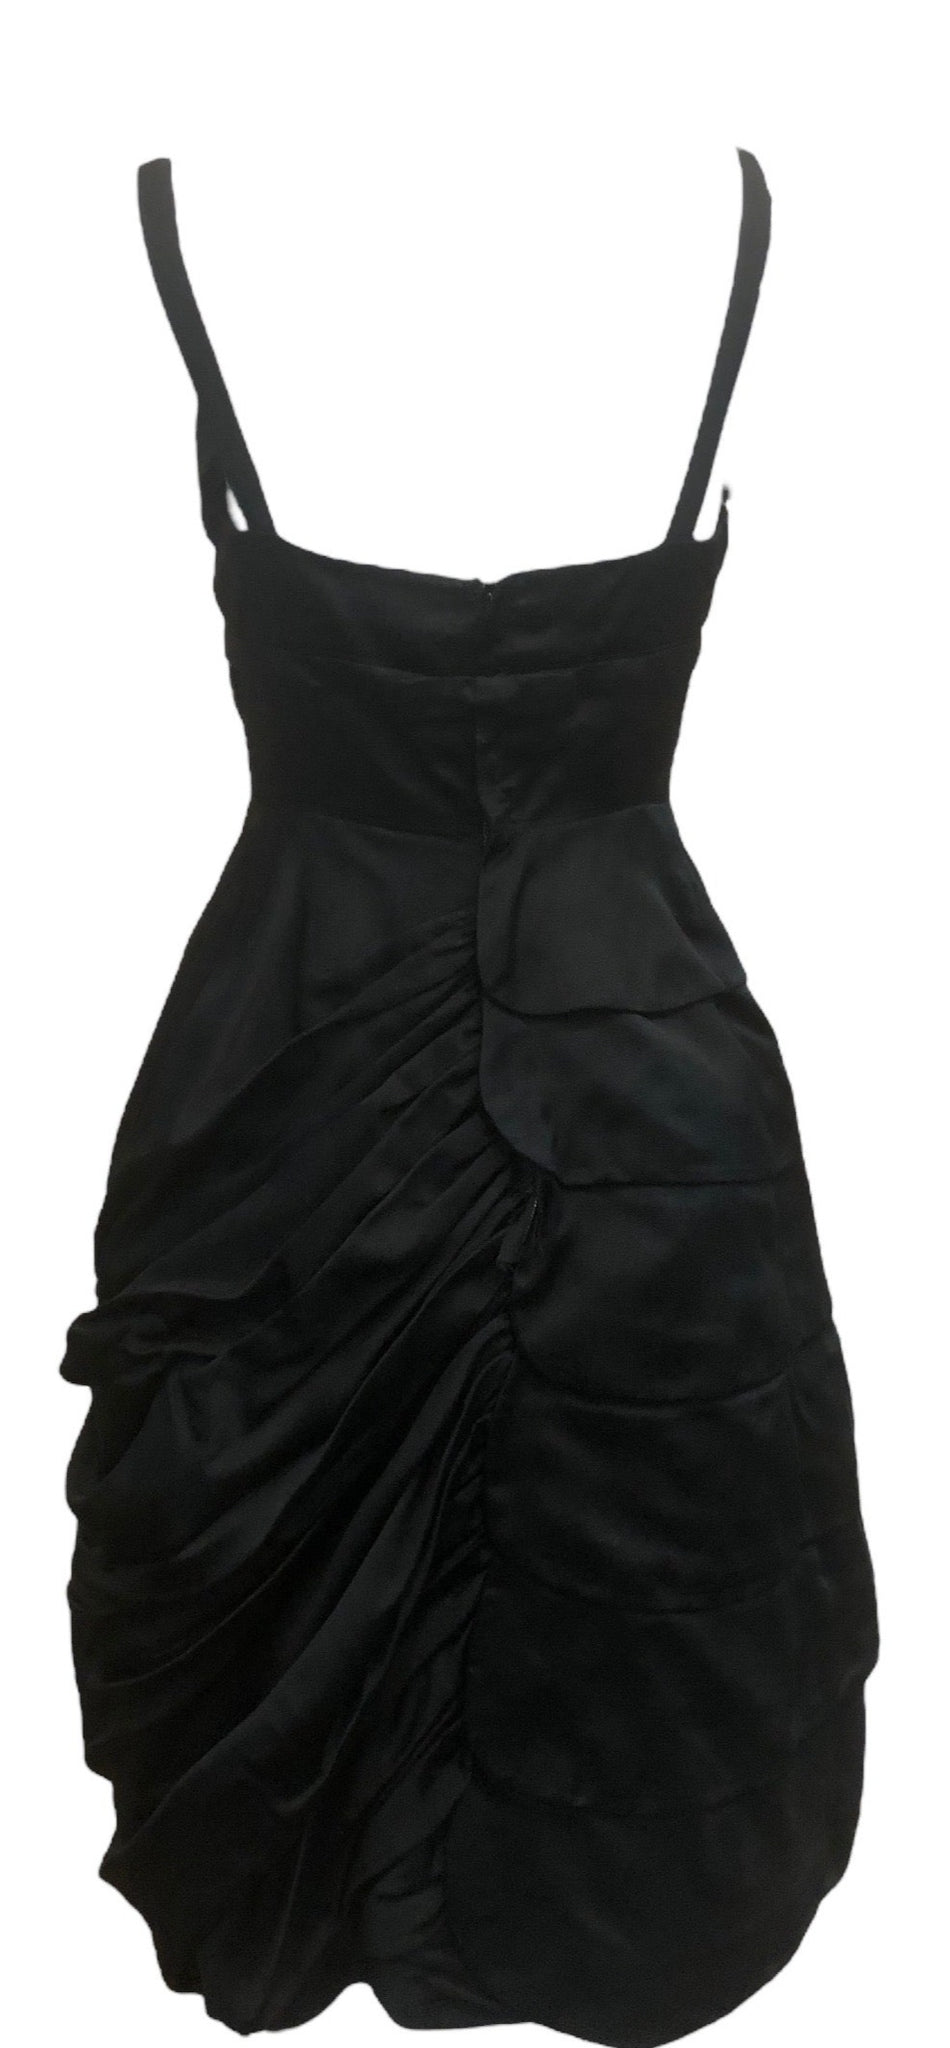  Mingolini Guggenheim 50s Black Faille Cocktail Dress BACK 3 of 5